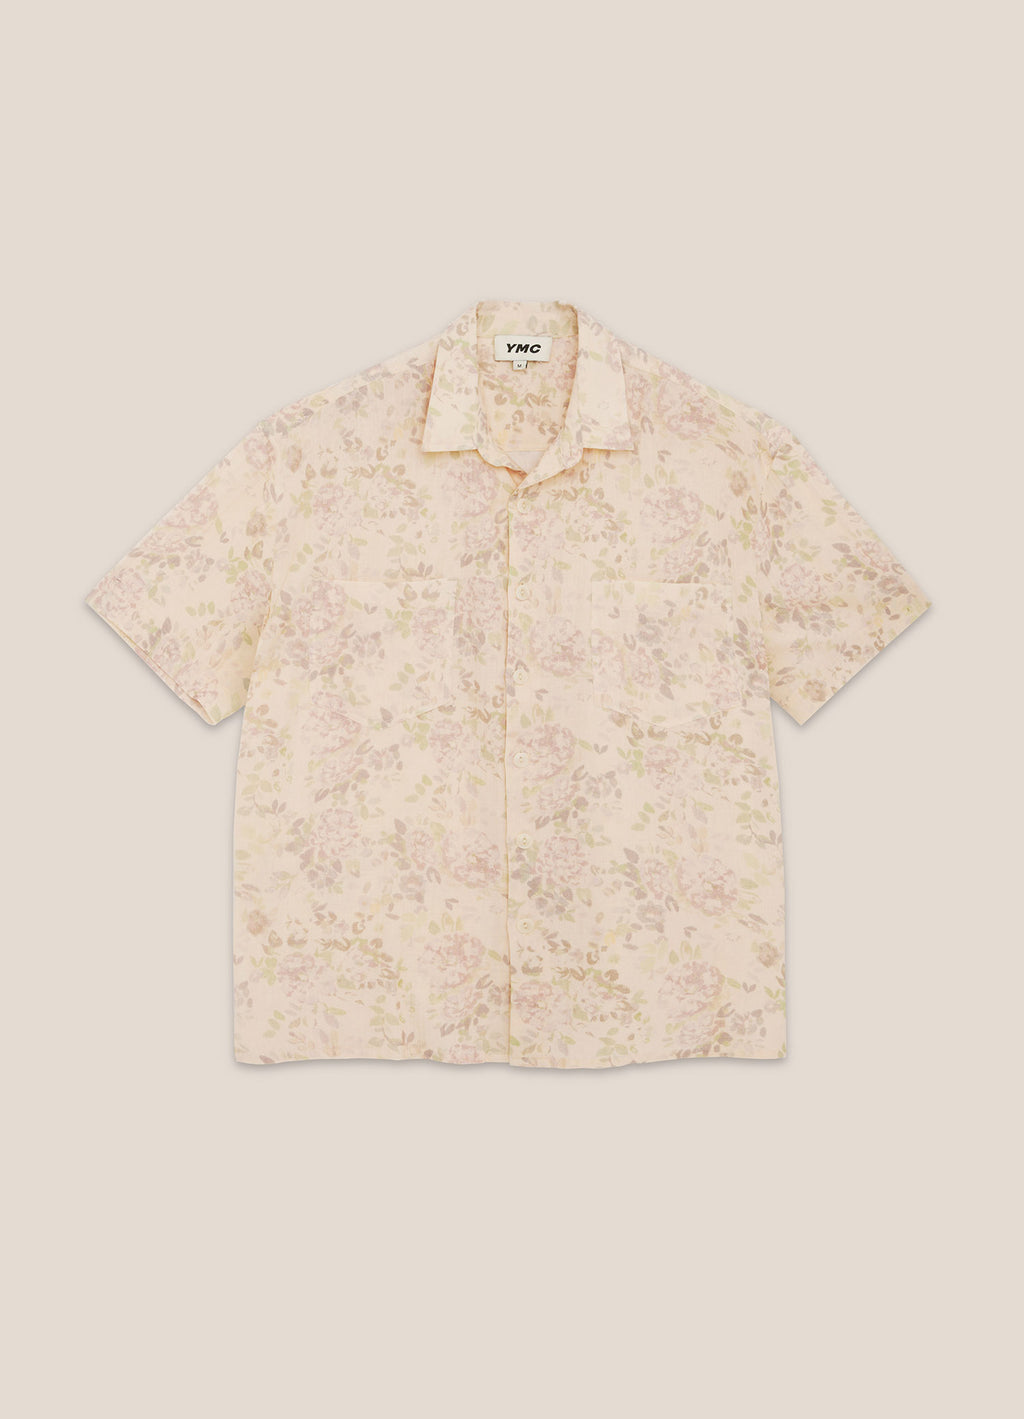 YMC Mitchum Cotton Flax Floral Print Short Sleeve Shirt - MULTI